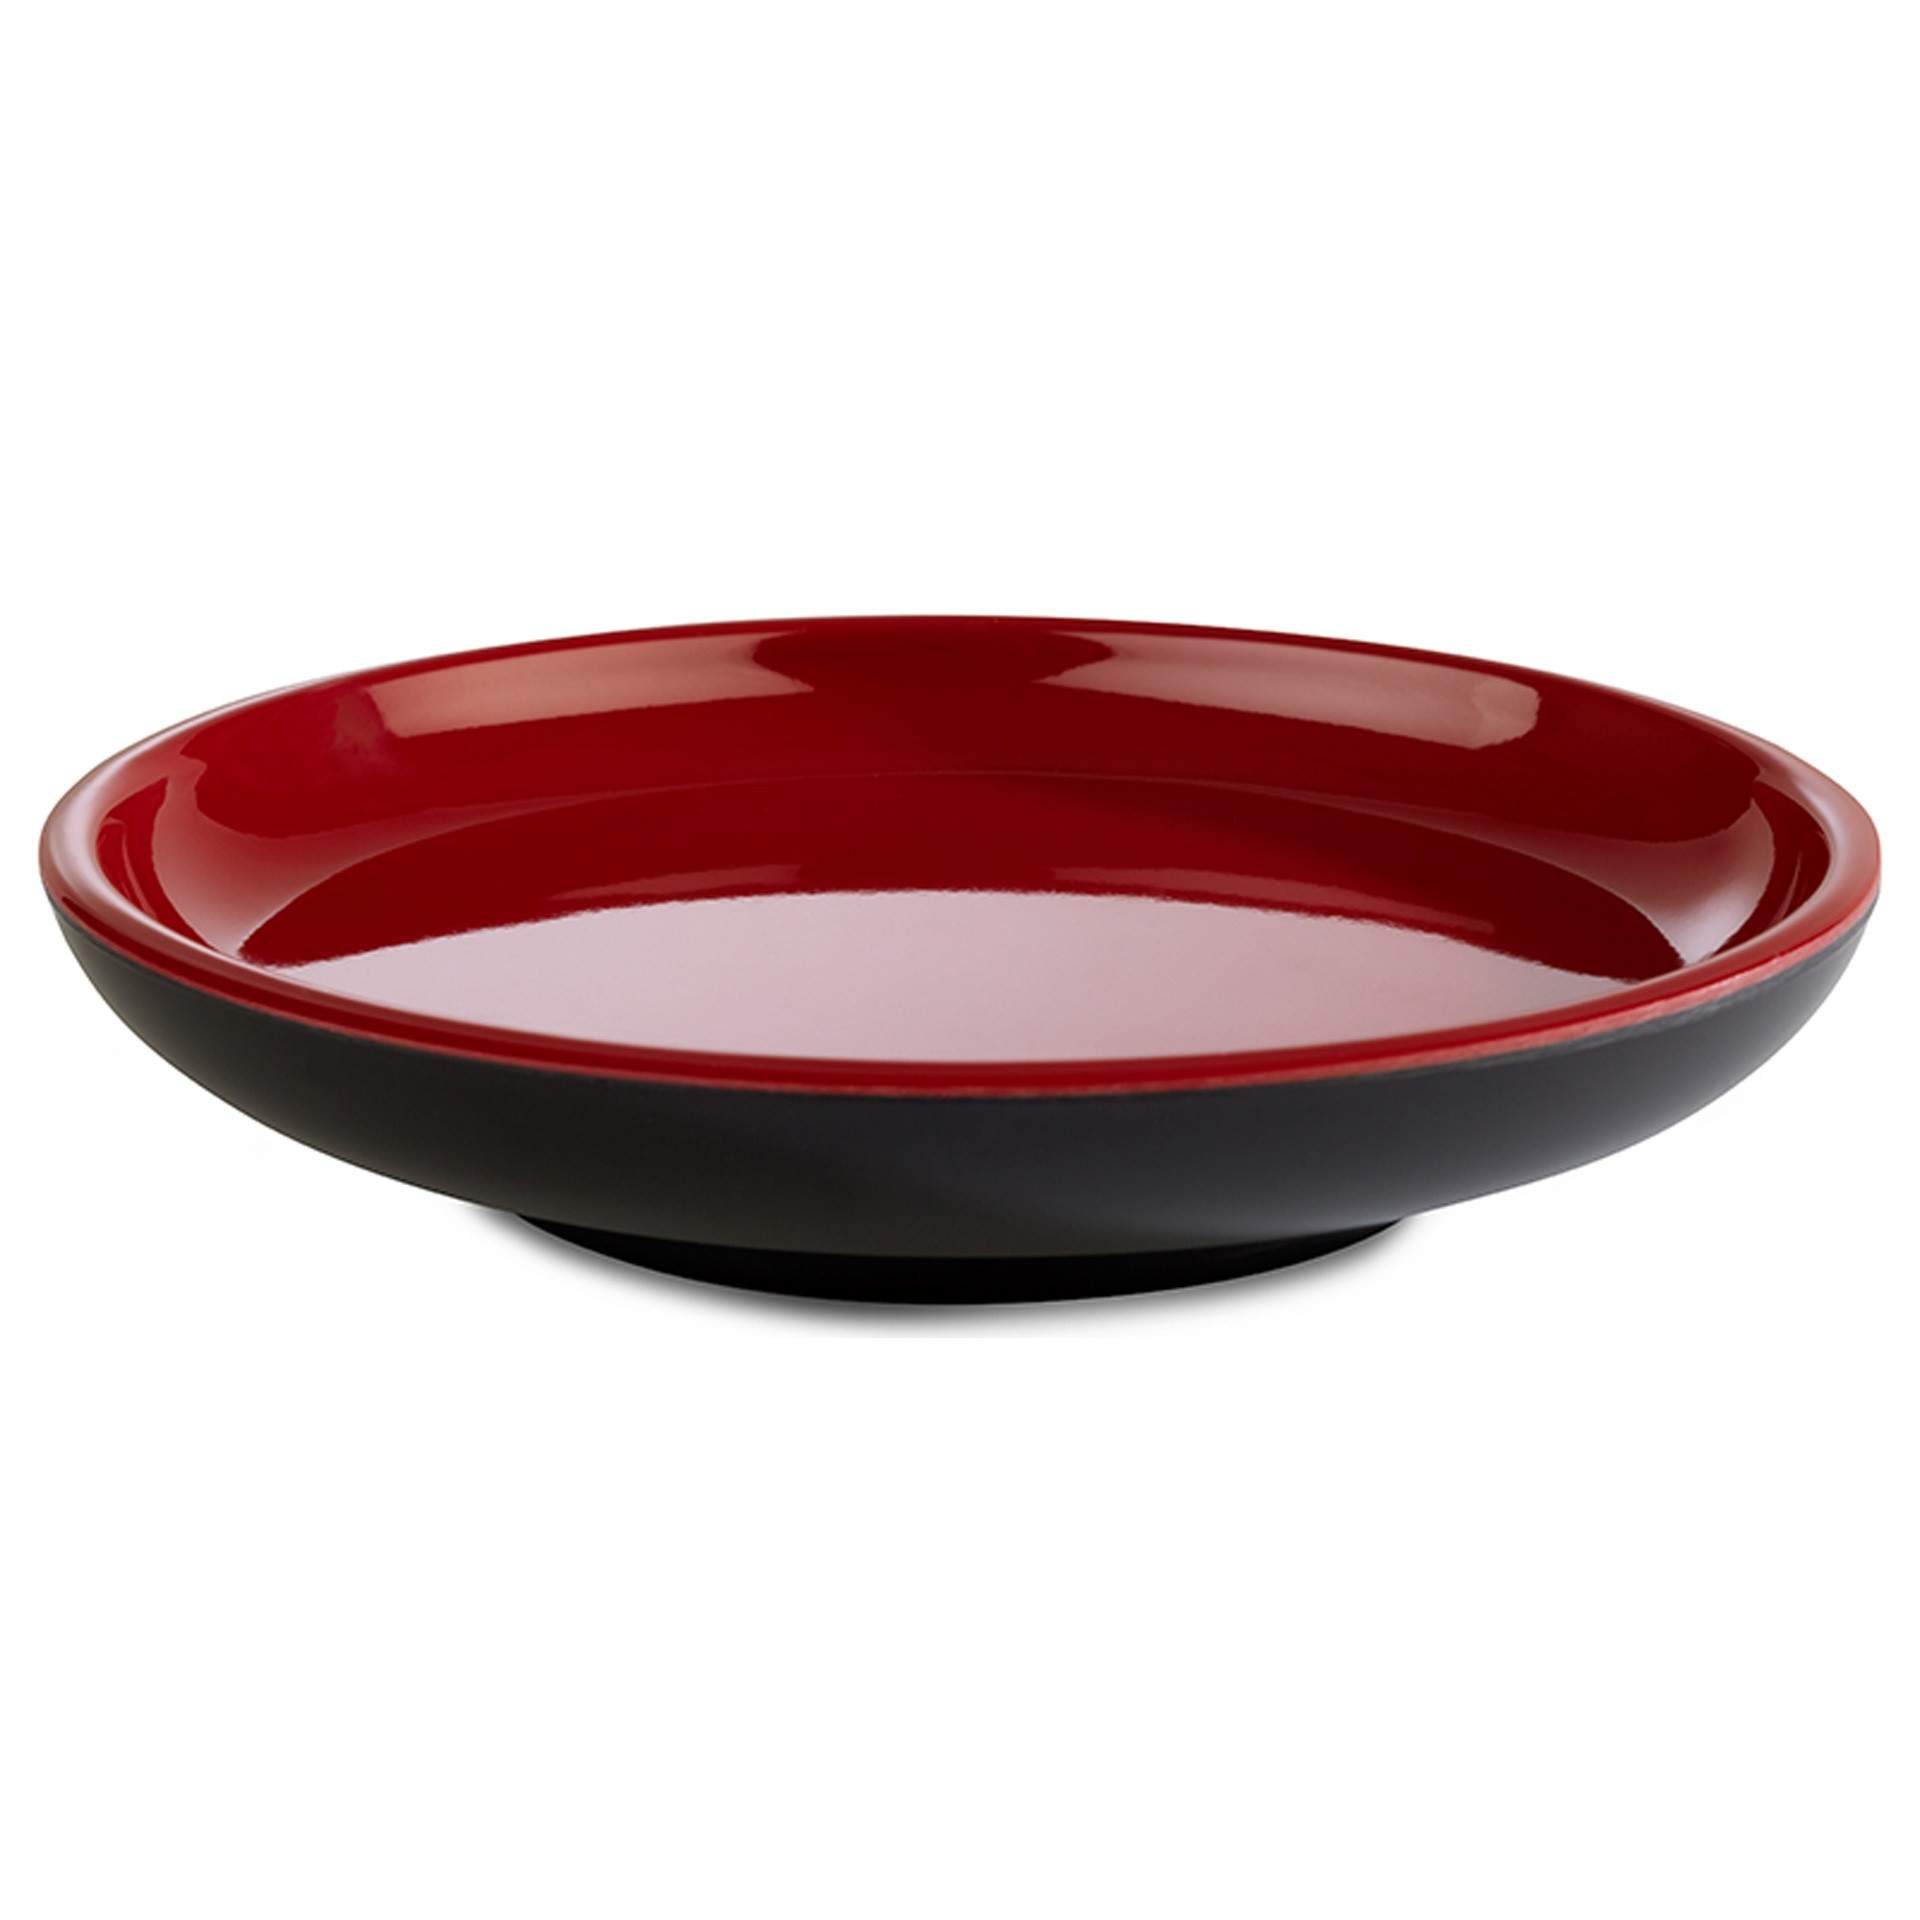 Teller (flach) - beidseitig farbig - Serie Asia Plus - rot / schwarz - Abm. 2,0 cm - Ø 11 cm - Melamin - 15434-B